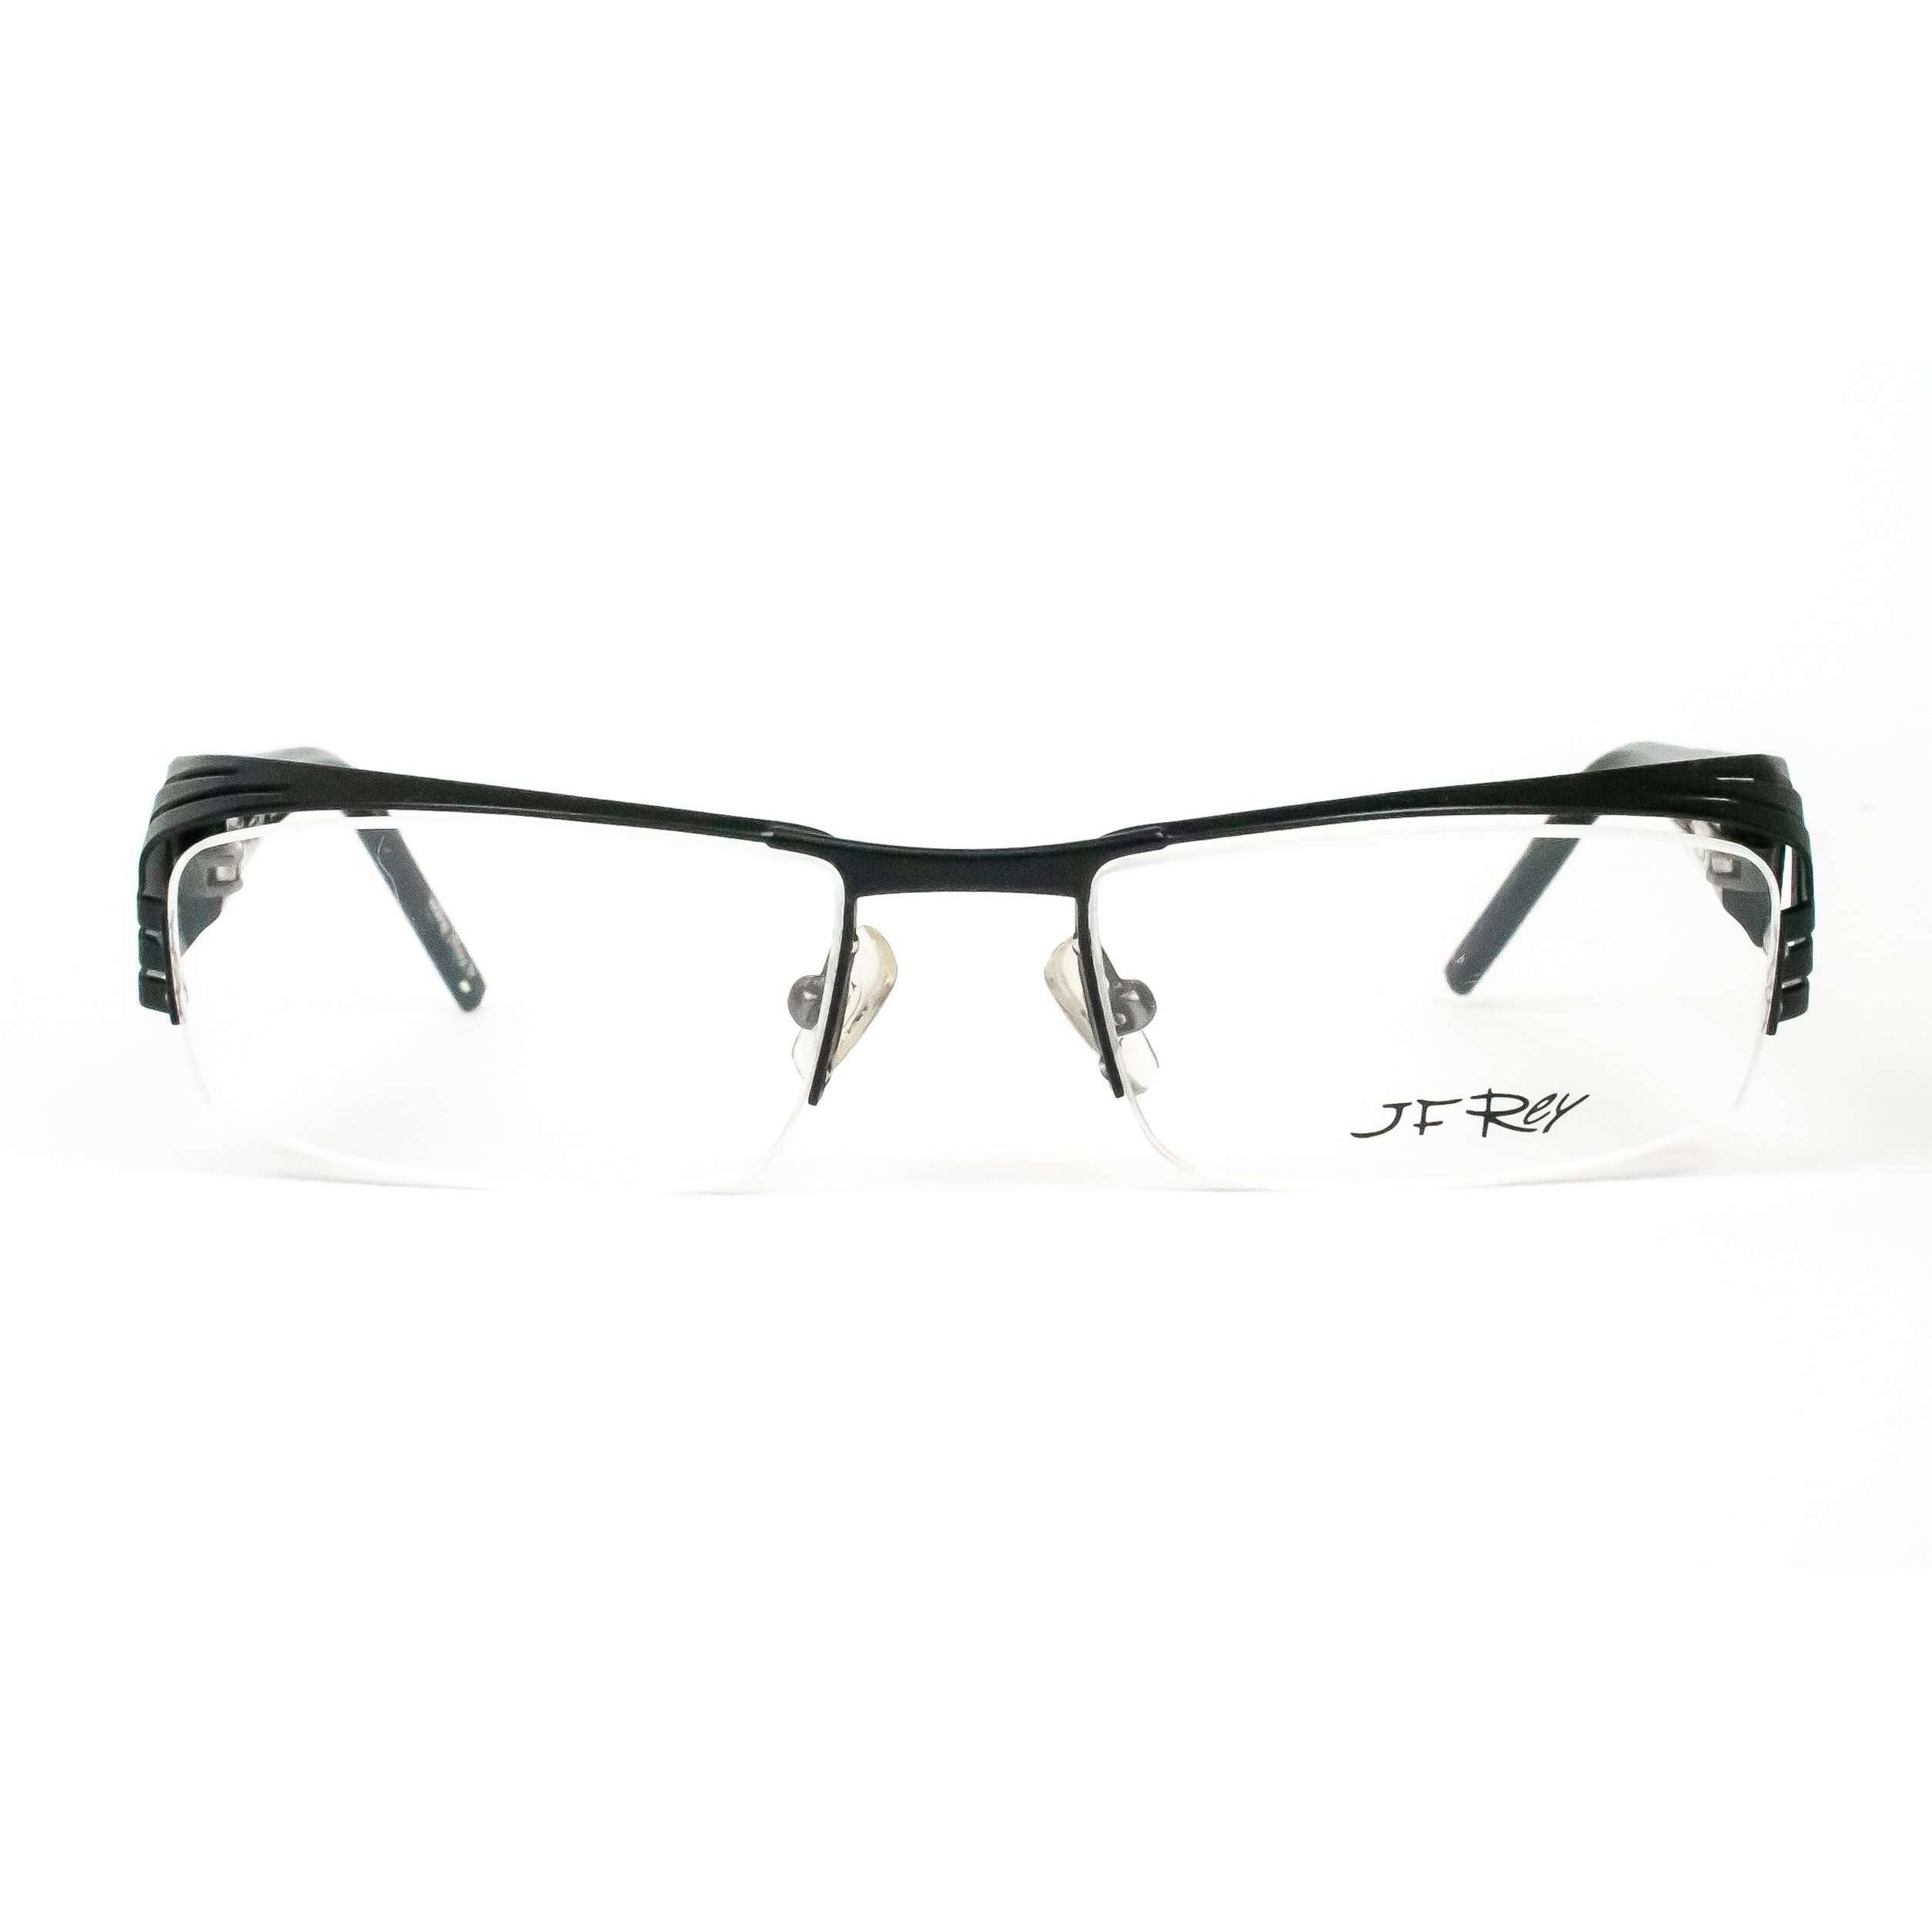 JF Rey Model 2337 Rectangle Glasses